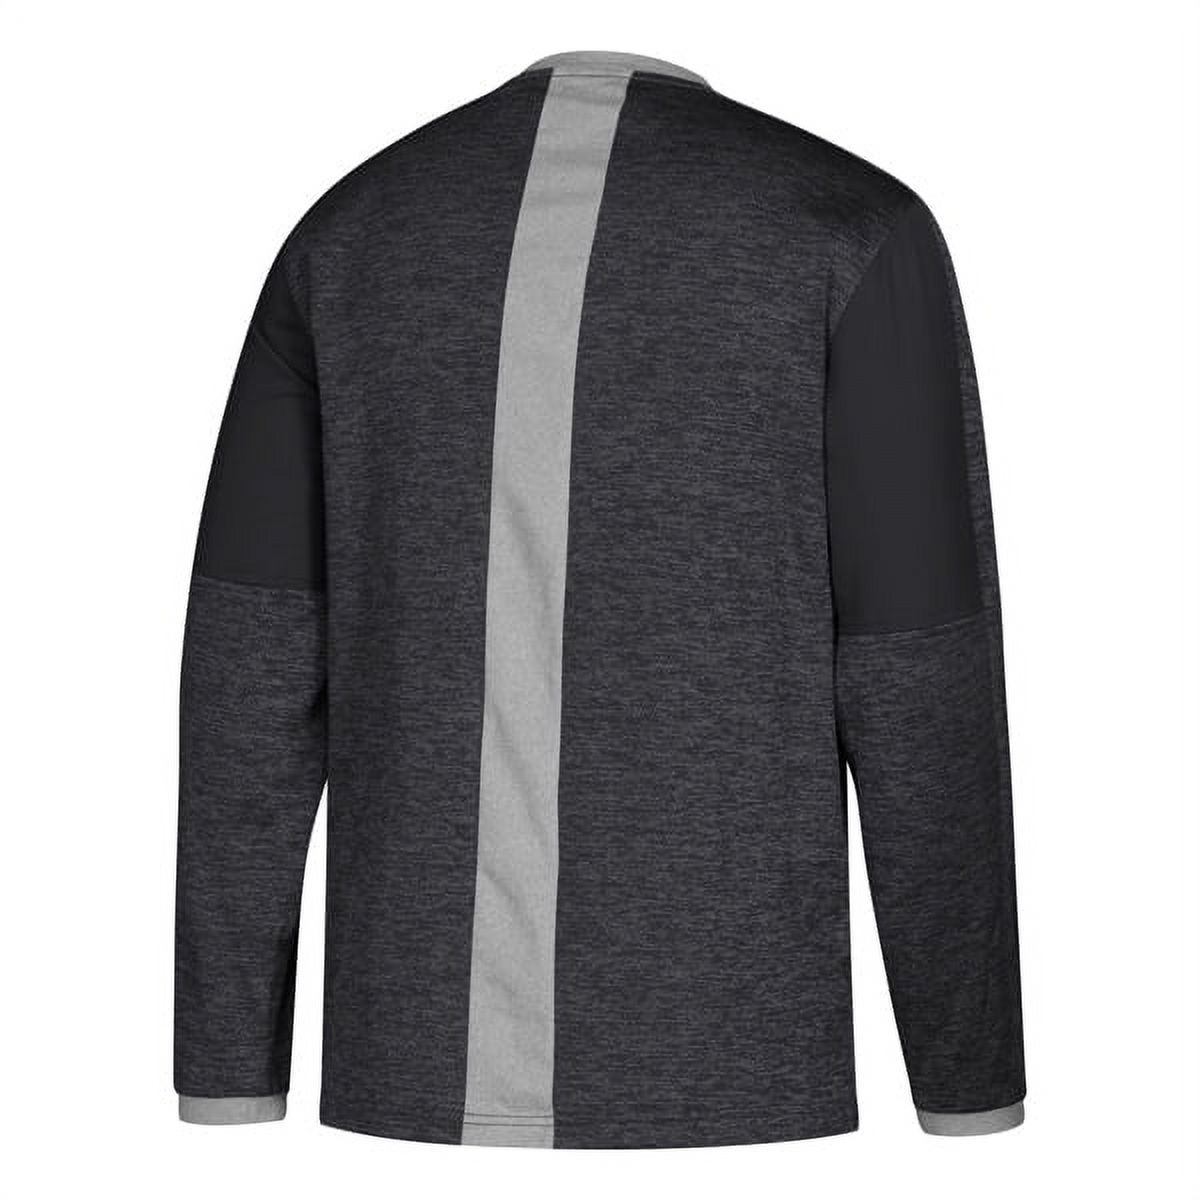 Adidas Men's Adult Fielders Choice Pullover Shirt Top Kangaroo Pocket (Black S) - image 2 of 2